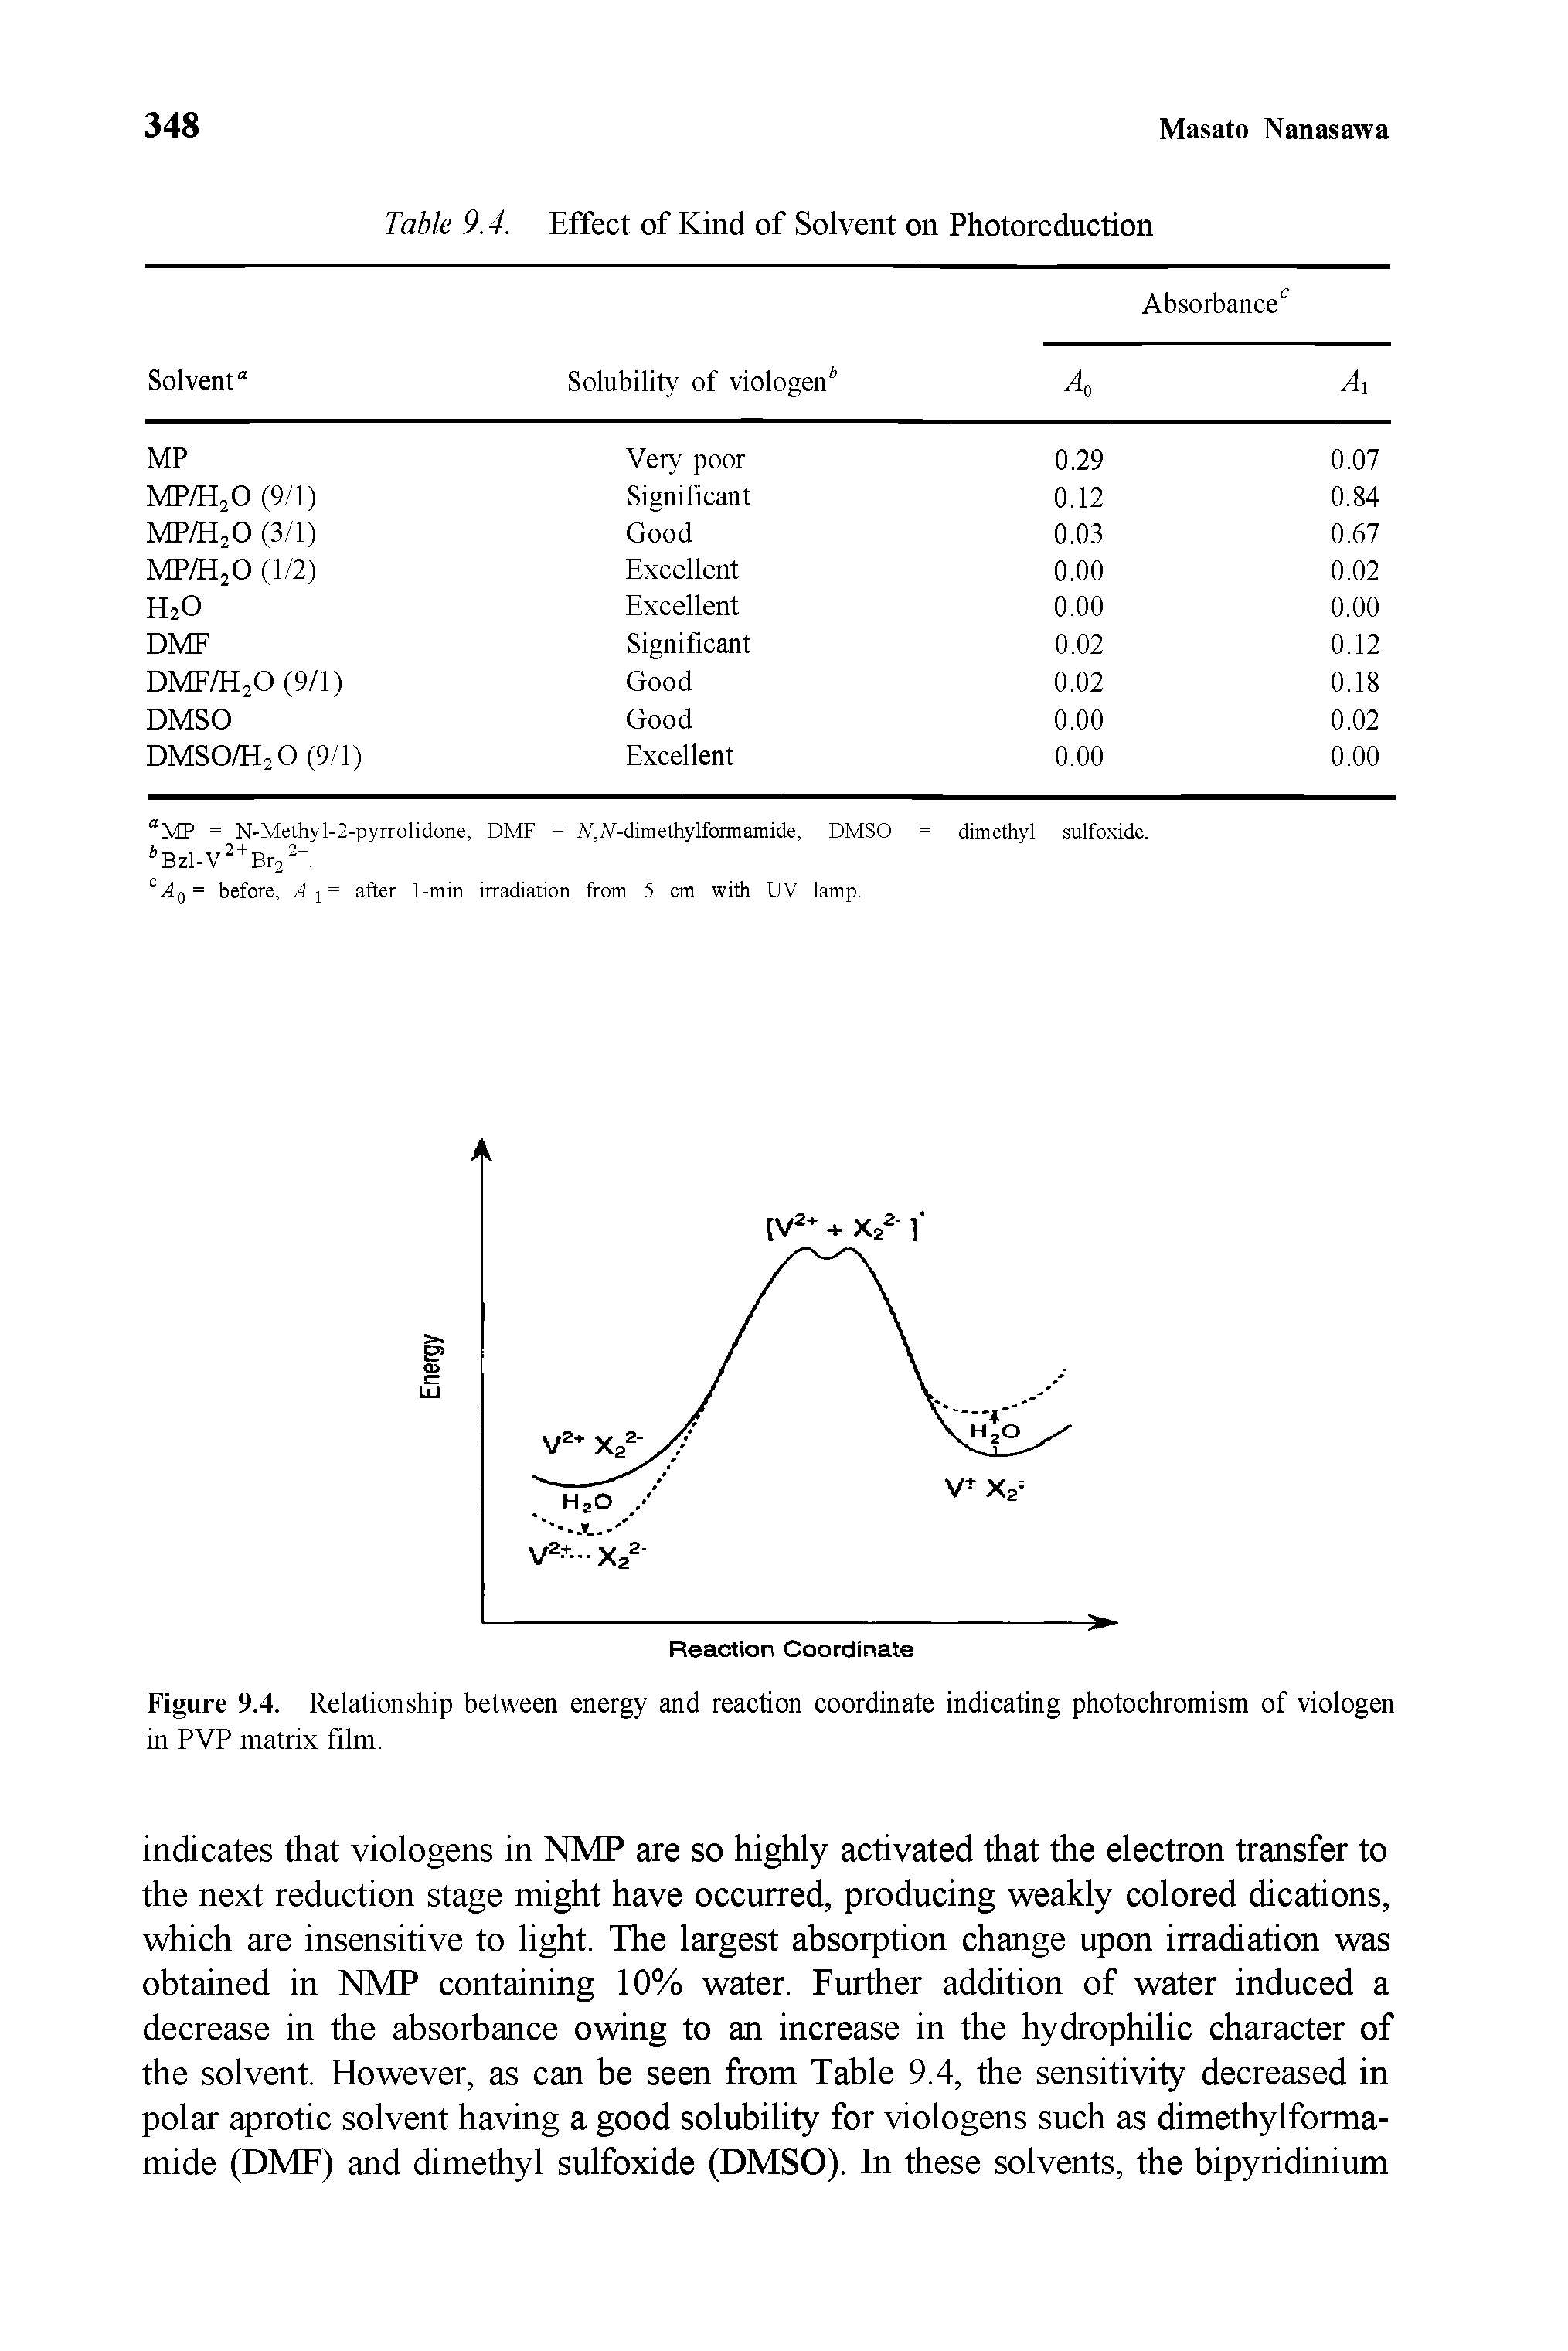 Figure 9.4. Relationship between energy and reaction coordinate indicating photochromism of viologen in PVP matrix film.